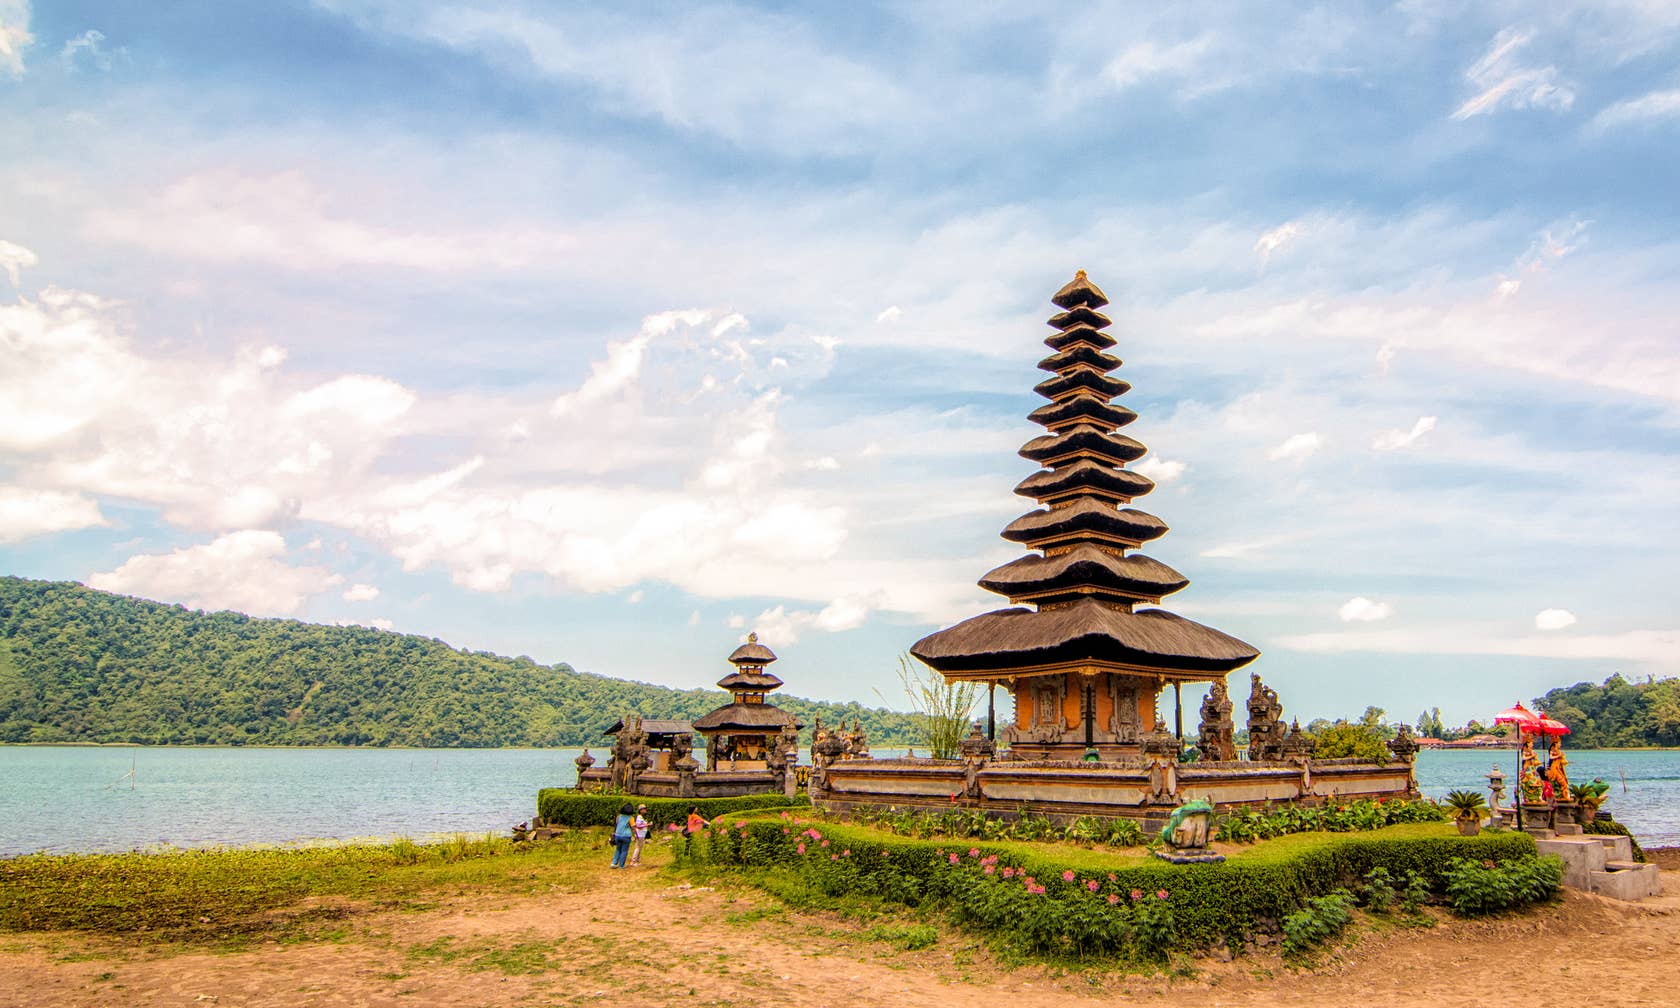 Affitti per le vacanze a Bali